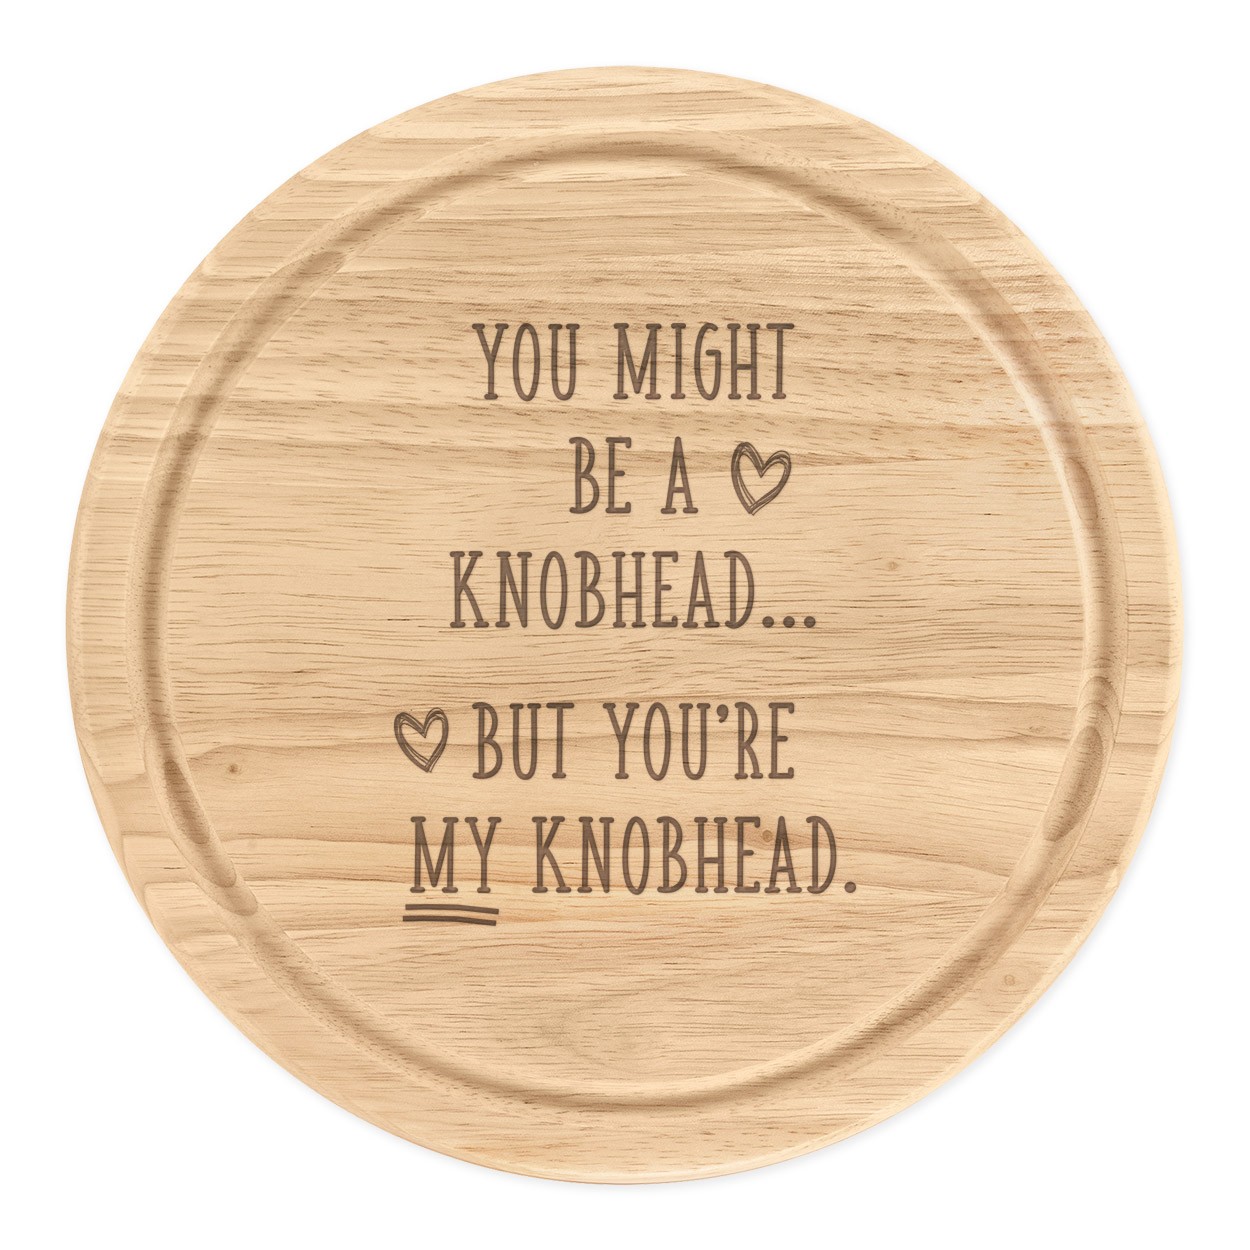 You Might Be A Kn-head But You're My A Kn-head Wooden Chopping Cheese Board Round 25cm